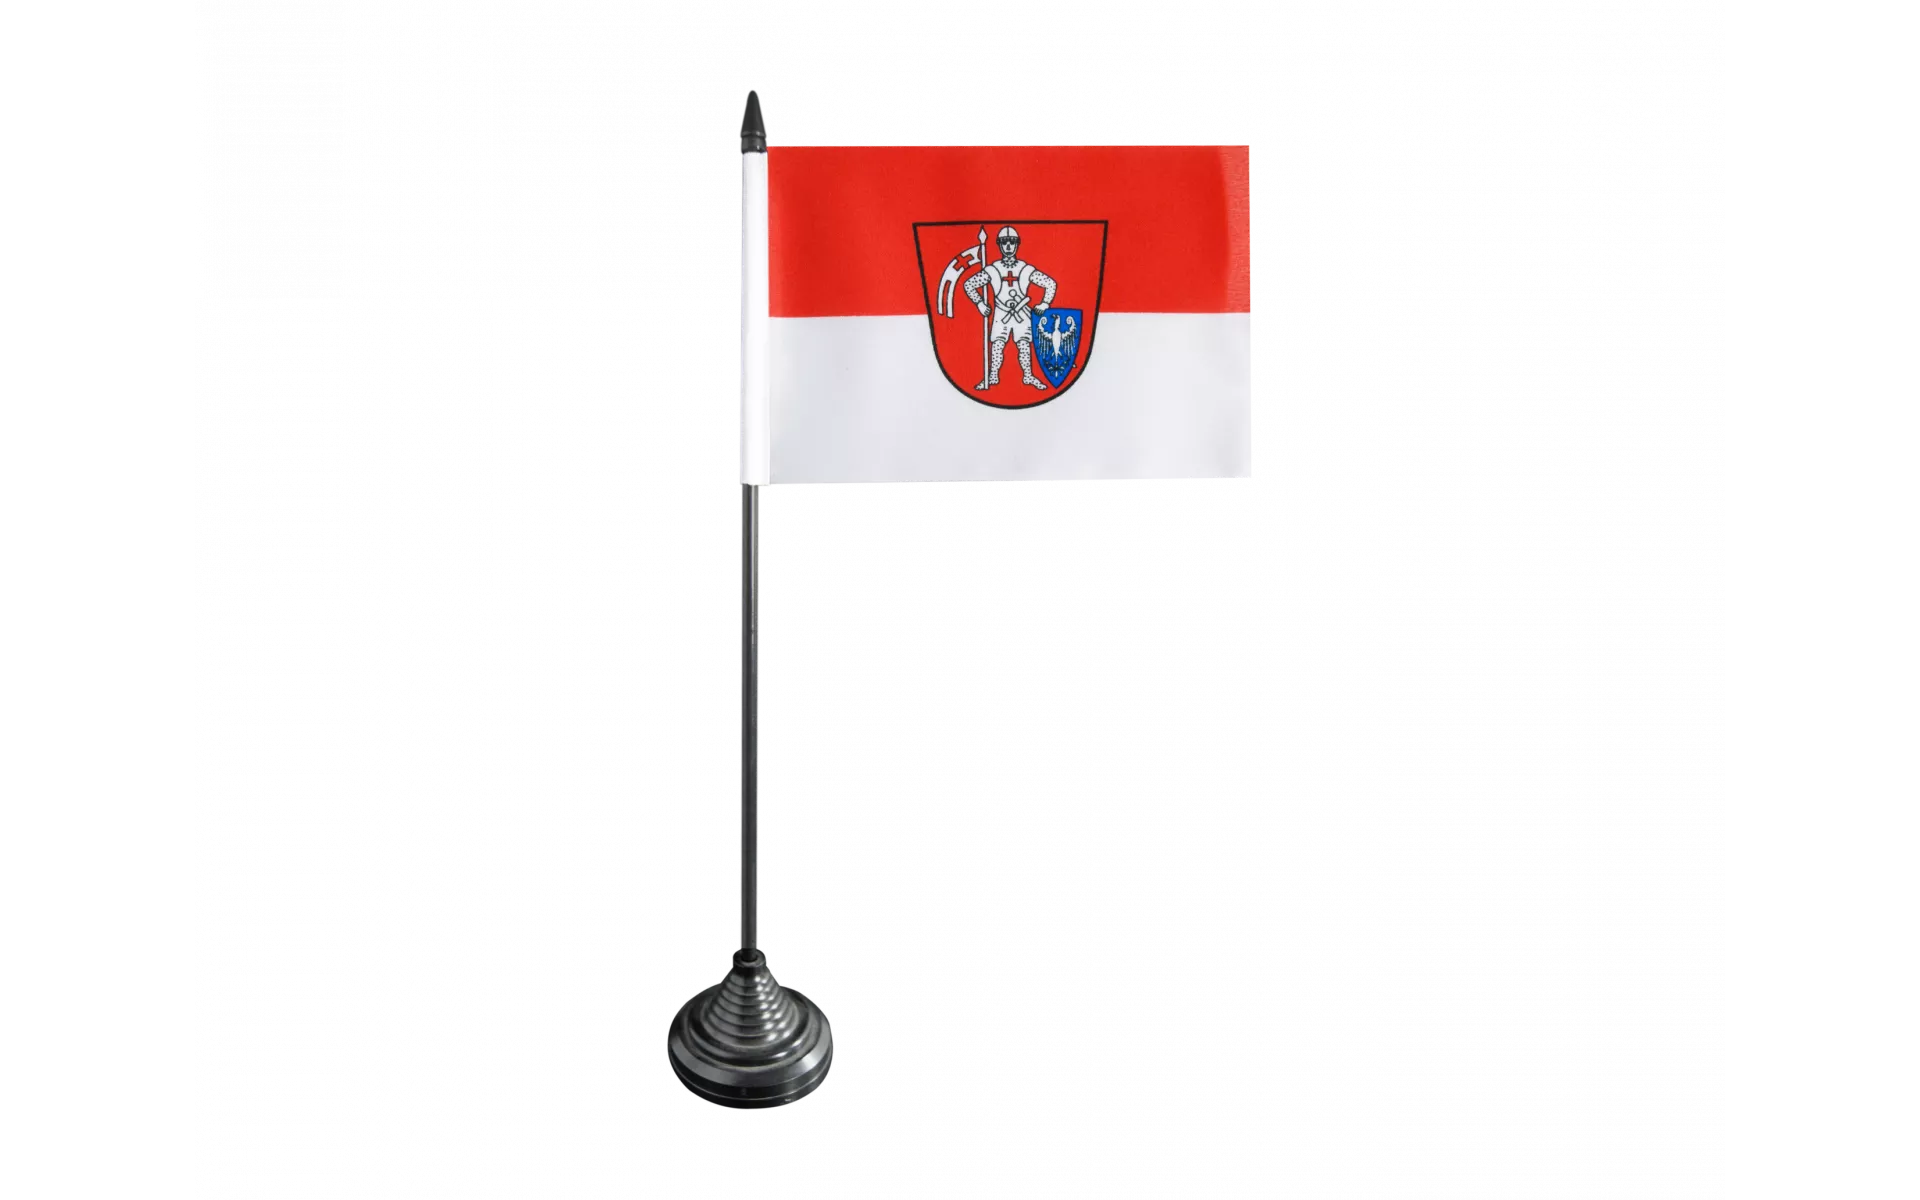 Tischflagge Landkreis Bamberg Tischfahne Fahne Flagge 10 x 15 cm 